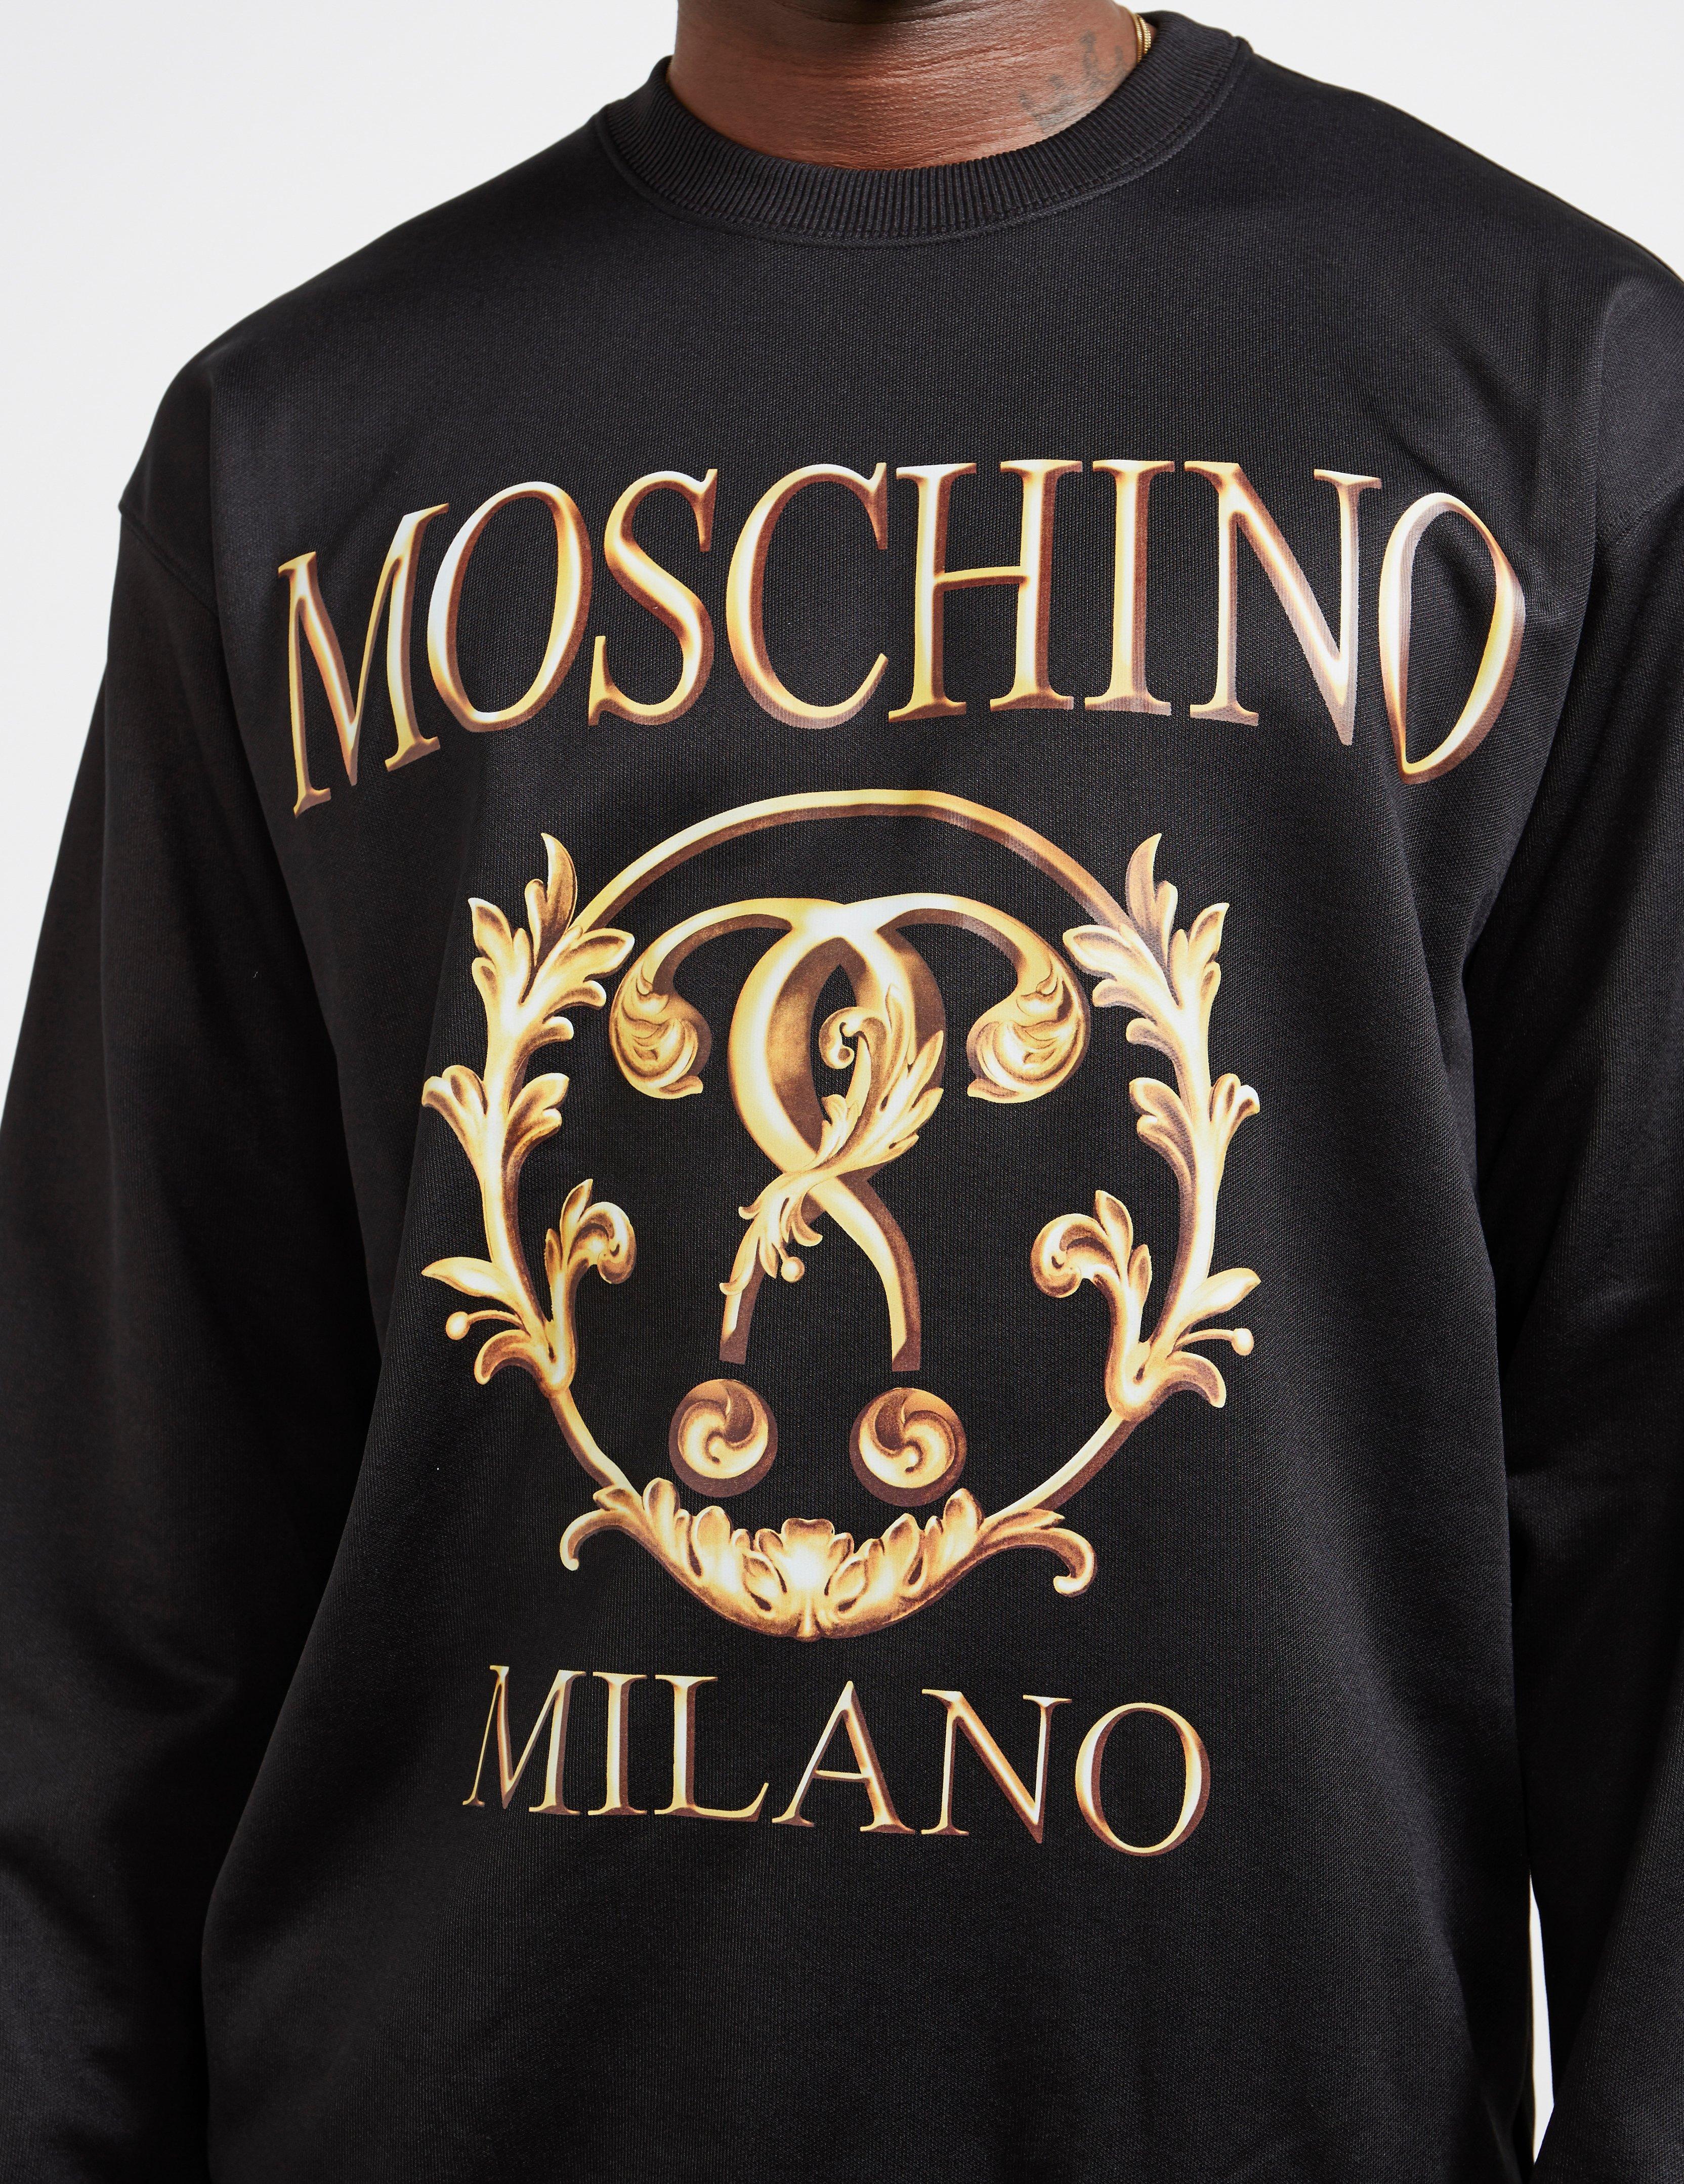 Moschino Gold Print Sweatshirt Black for Men - Lyst